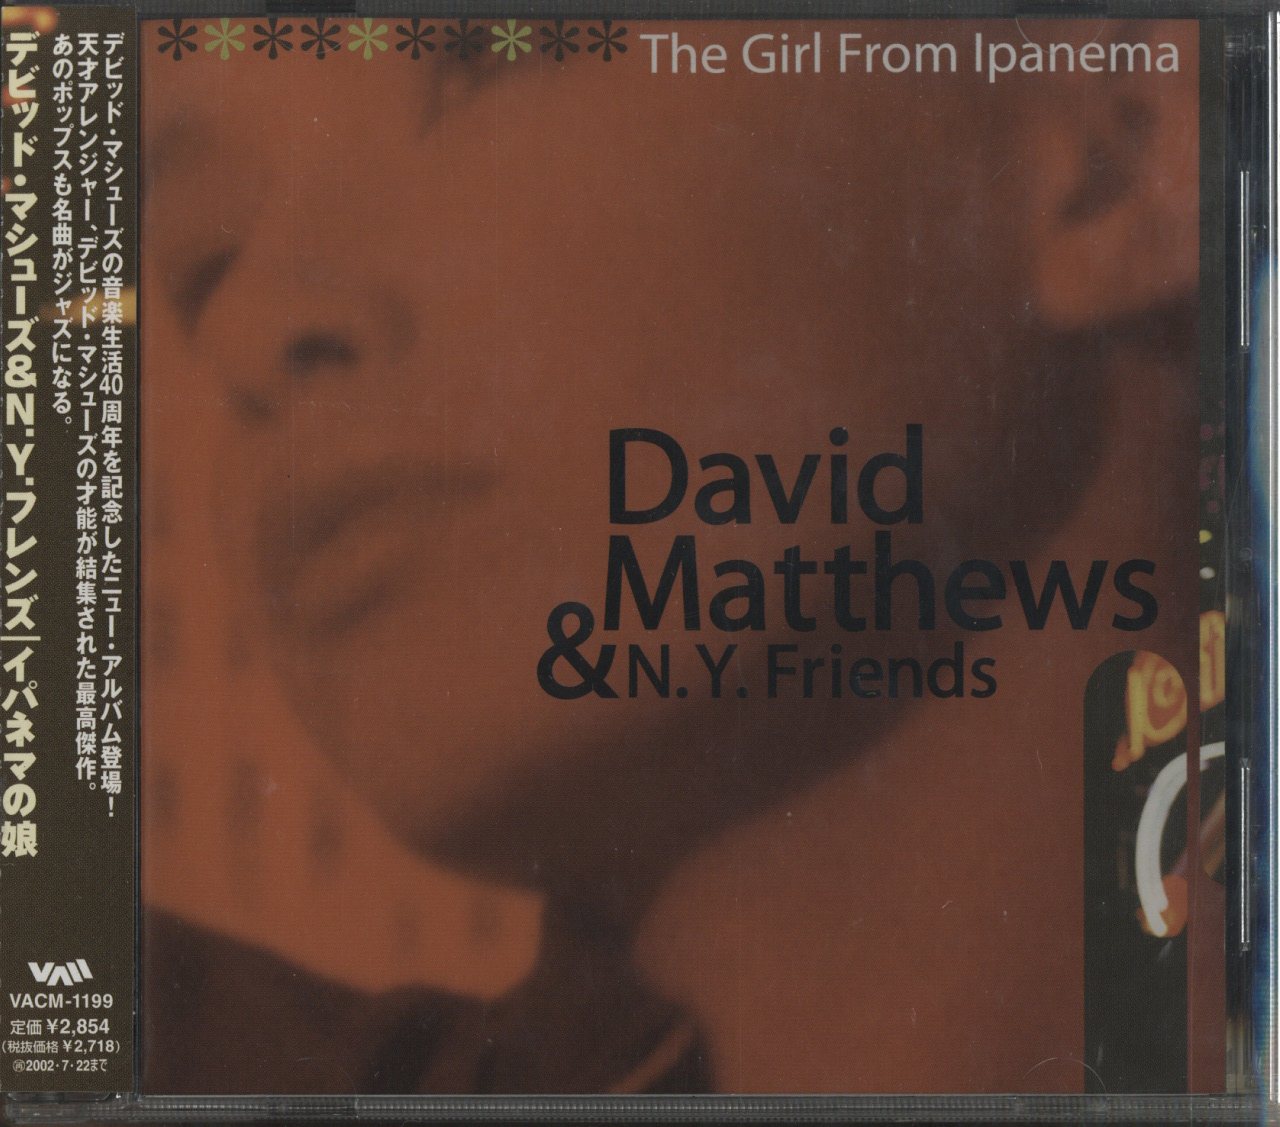 DAVID MATTHEWS - The Girl From Ipanema cover 